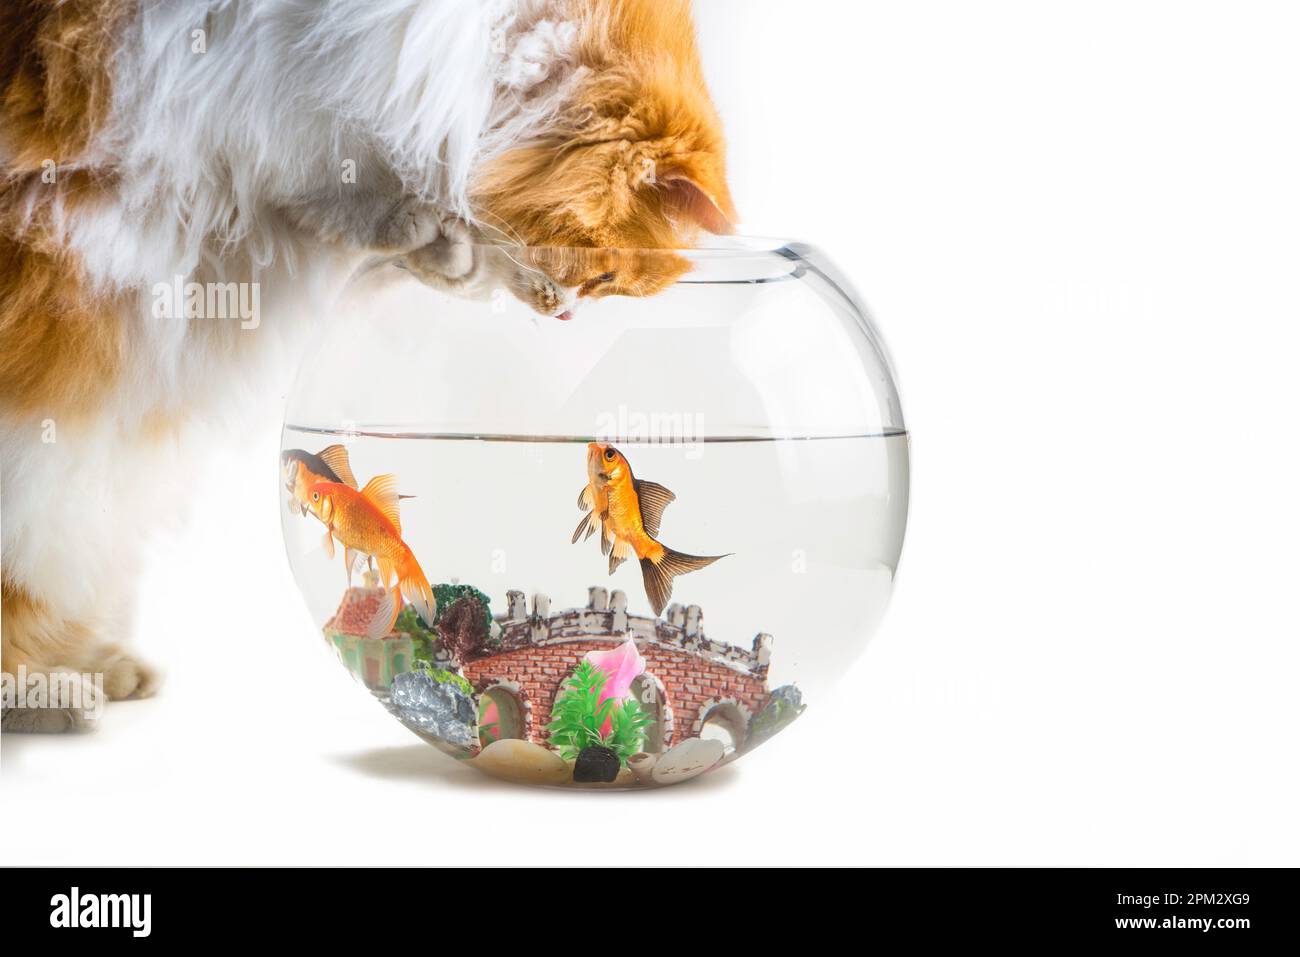 https://c8.alamy.com/comp/2PM2XG9/cat-looking-at-fish-bowl-2PM2XG9.jpg